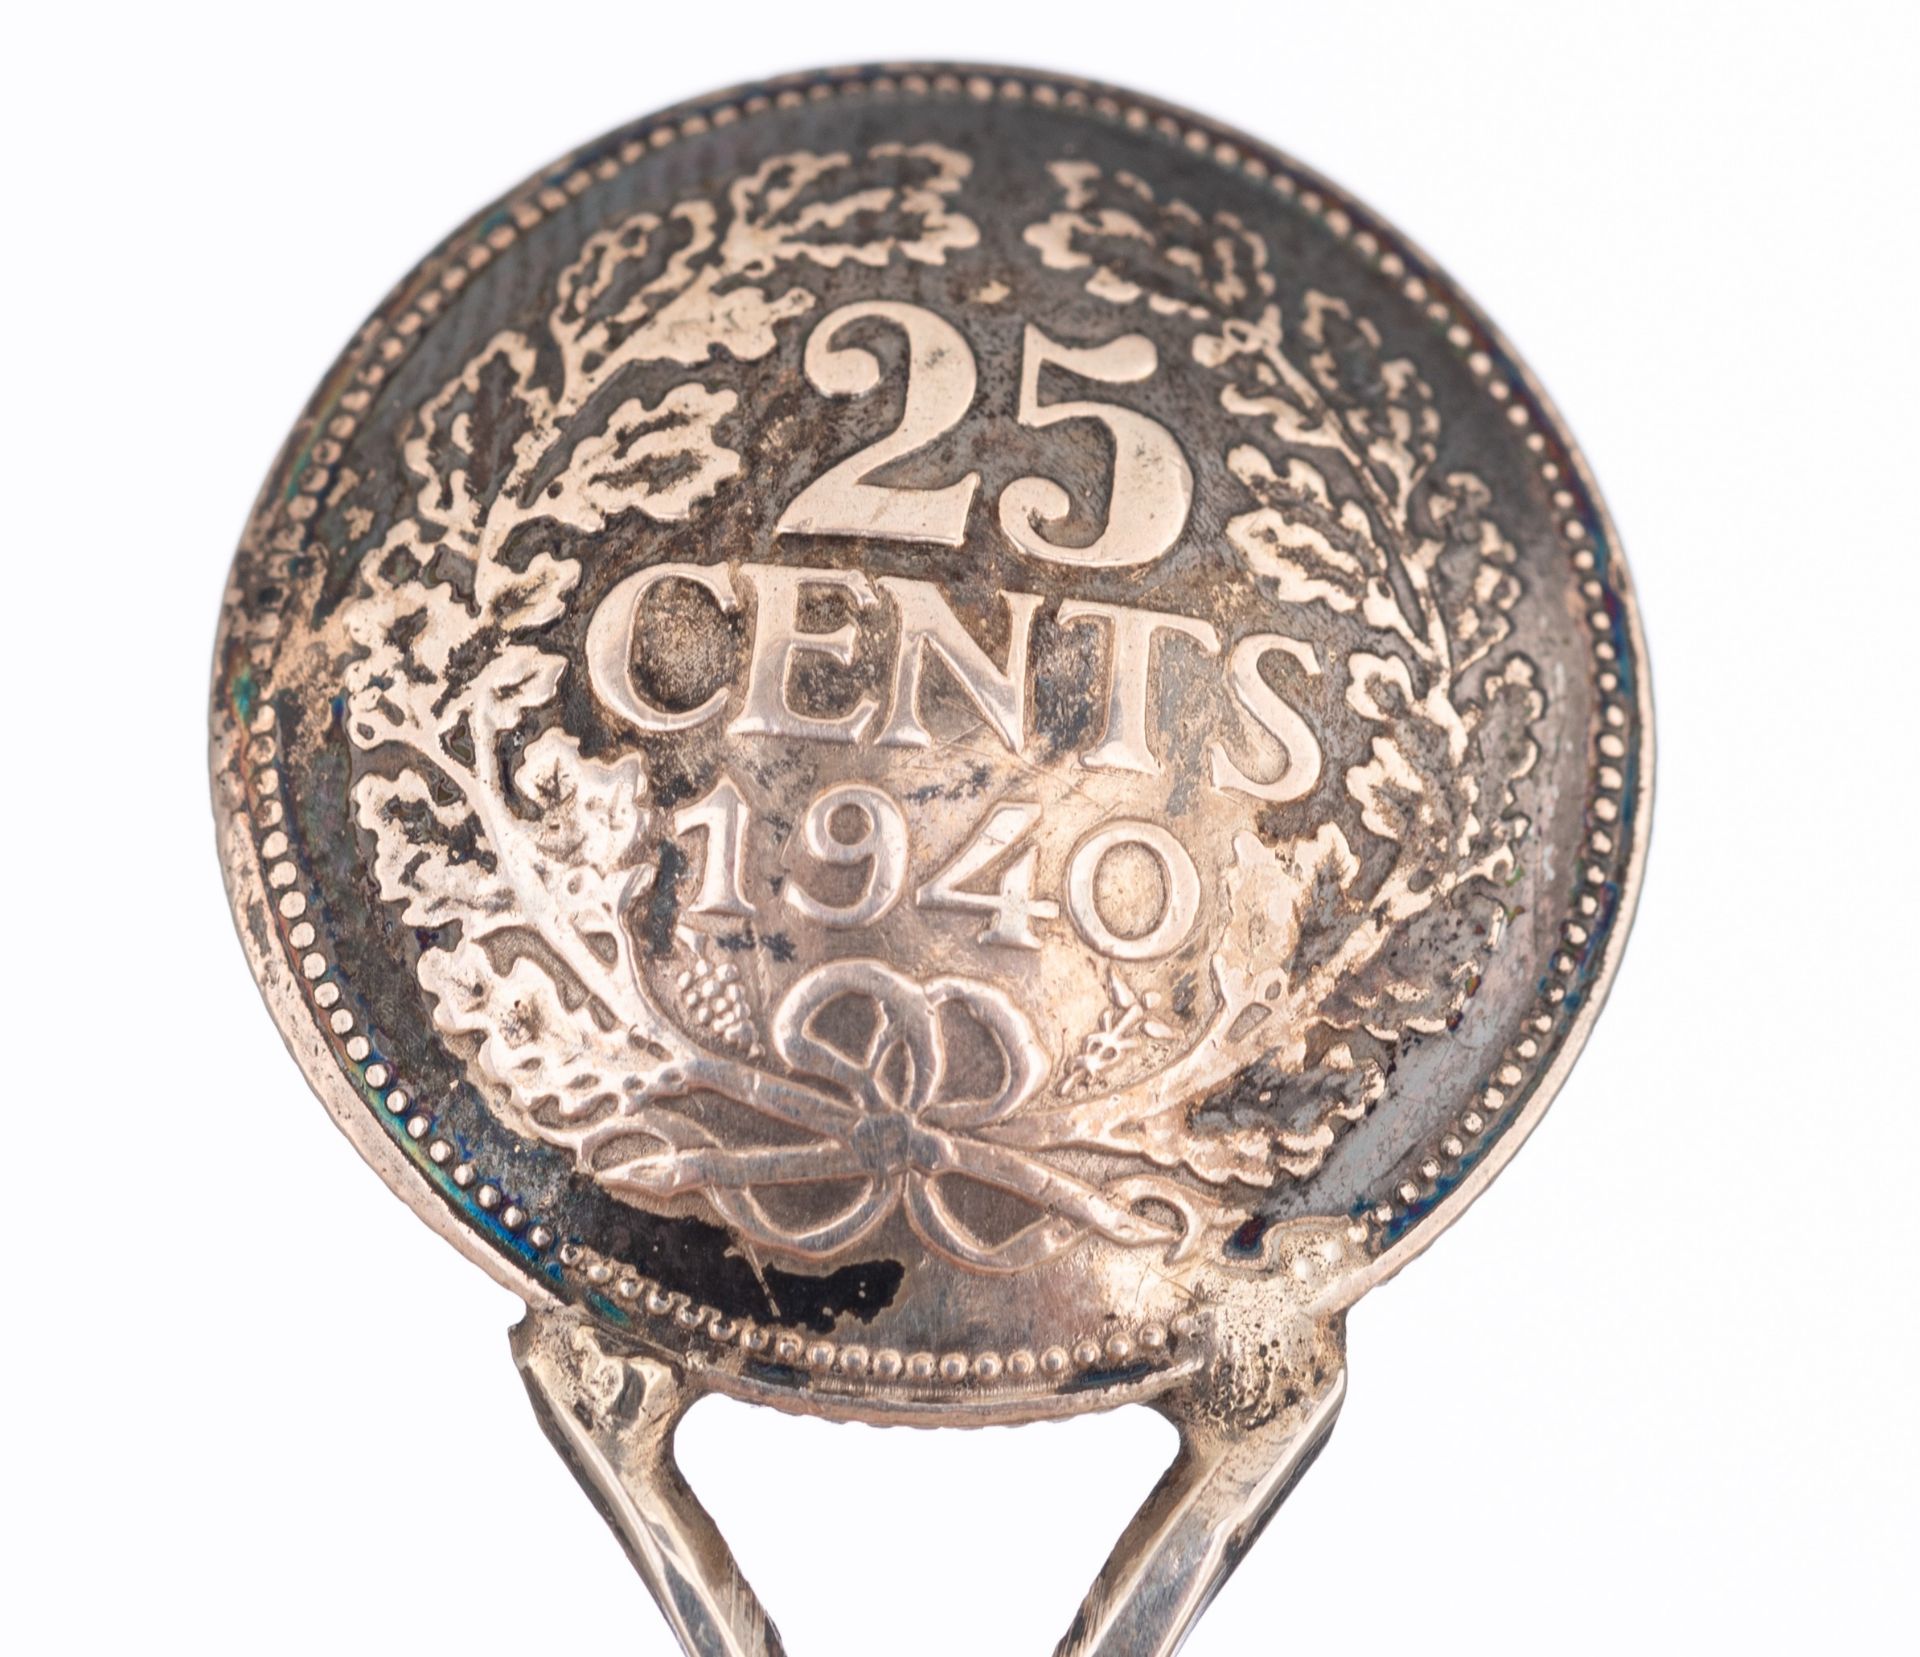 Various silver (800 > 935/000) 19th & 20thC 'Objets de vertu', toys, ornamental items, etc., the tot - Image 27 of 50